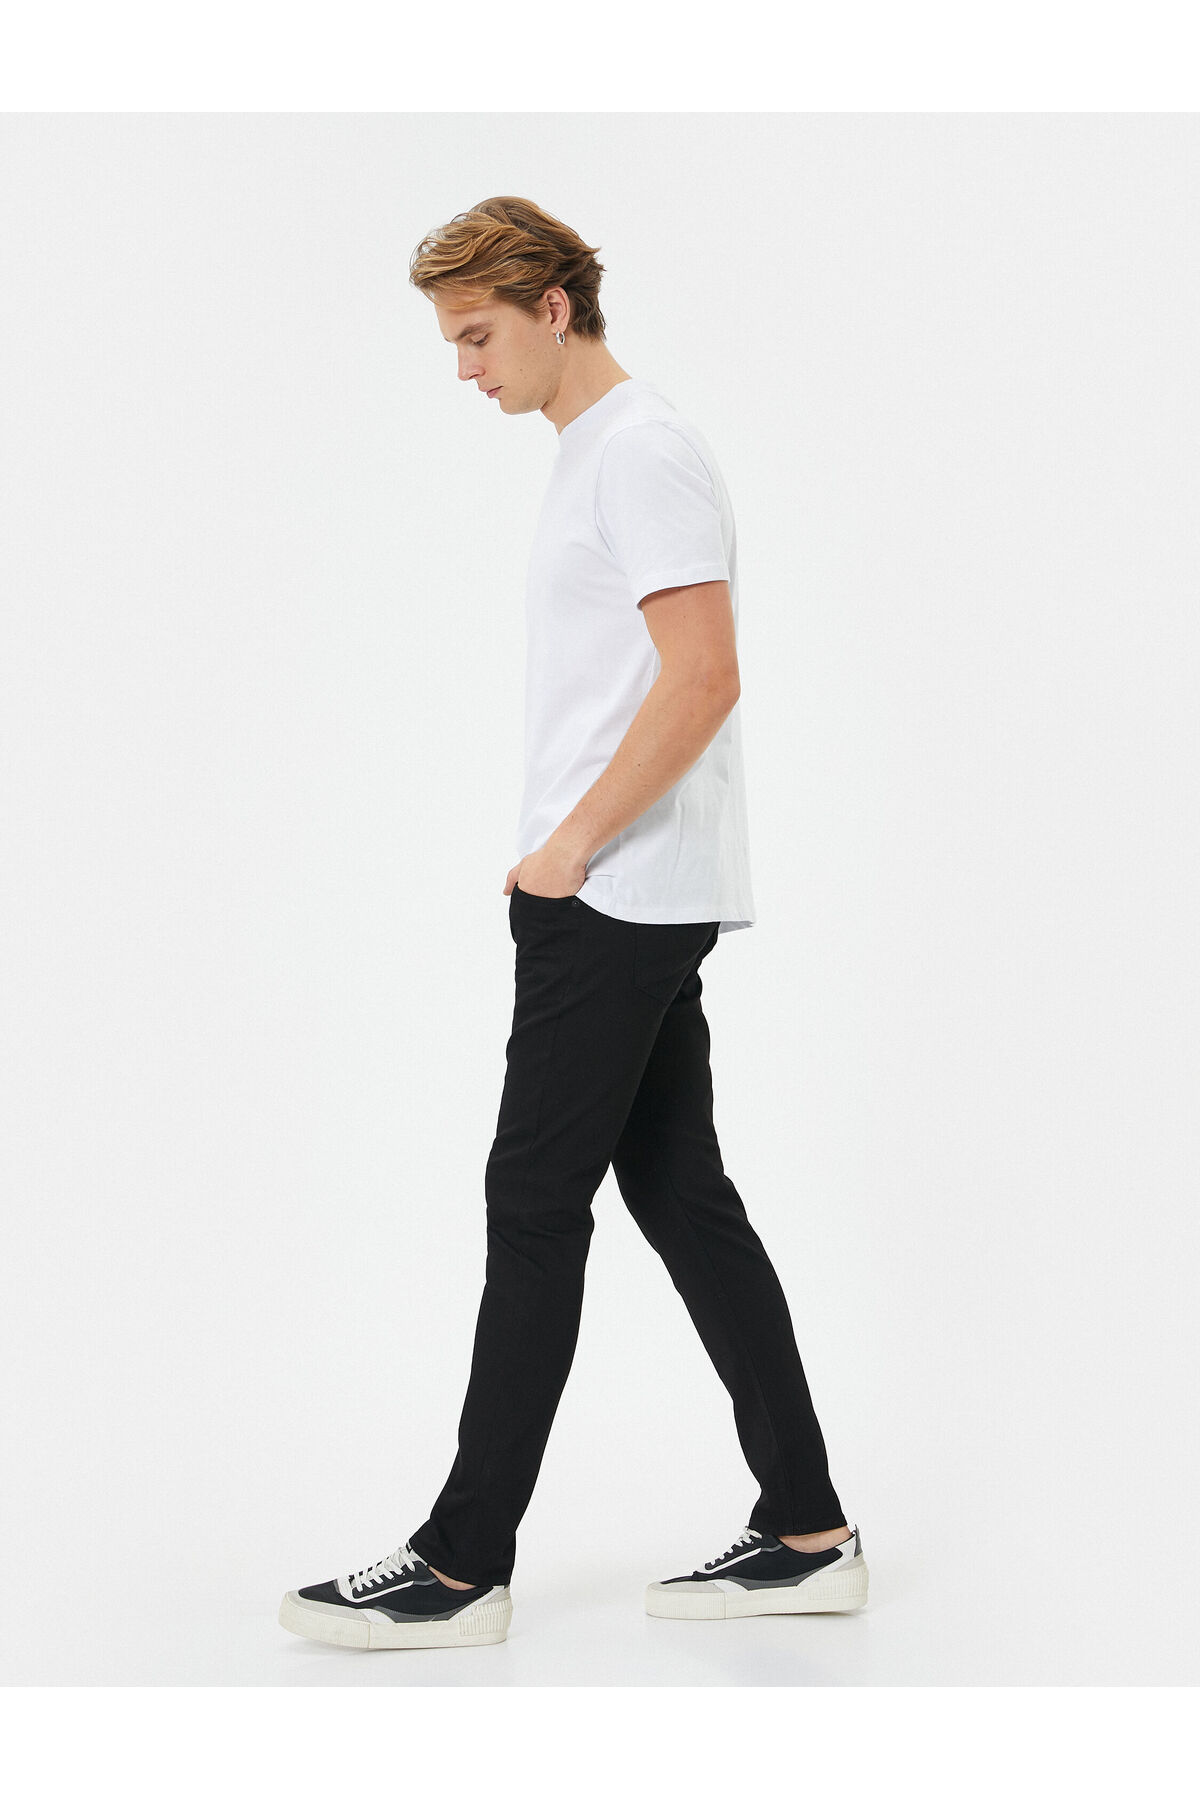 Koton Slim Straight Fit Jeans - Chadwick Jean